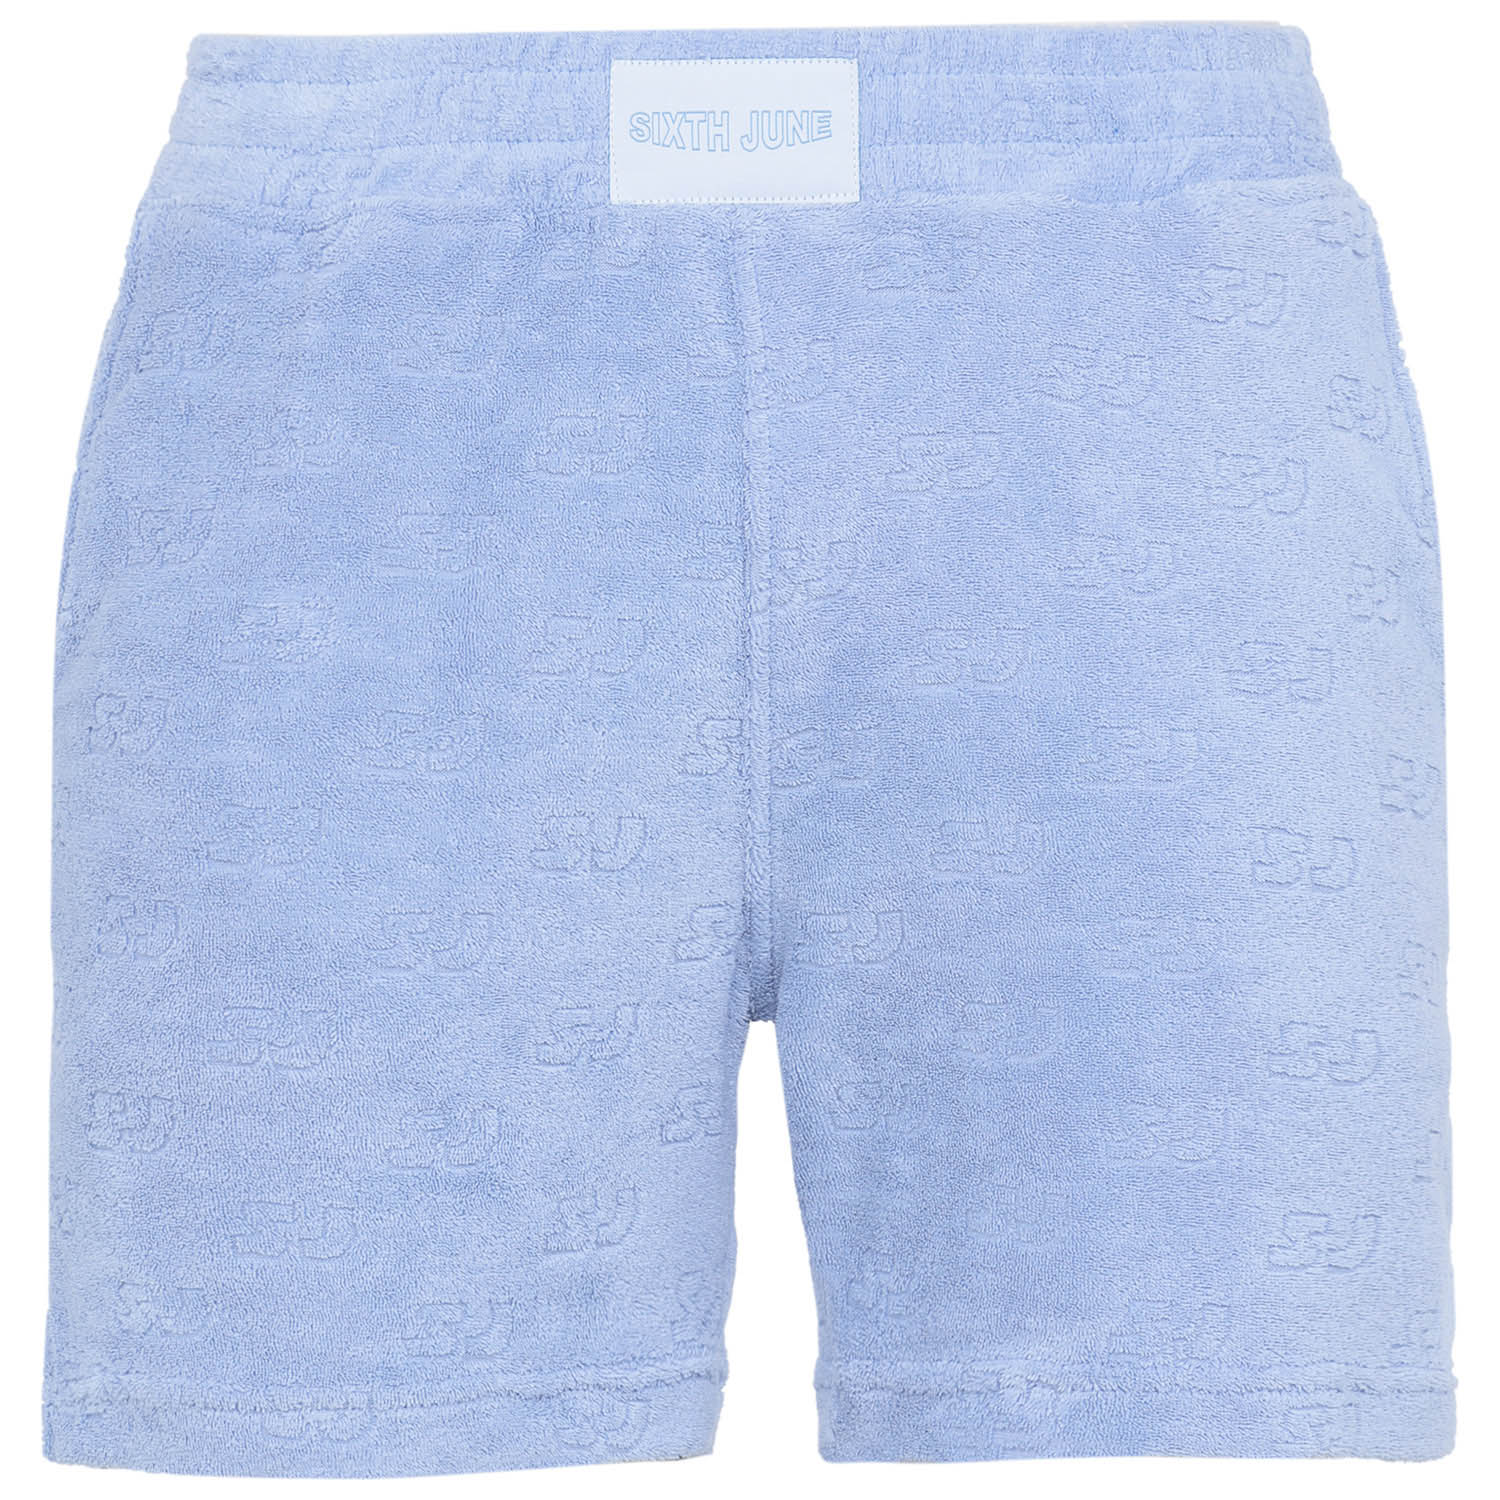 Sixth June - Short monogramme towel Bleu clair